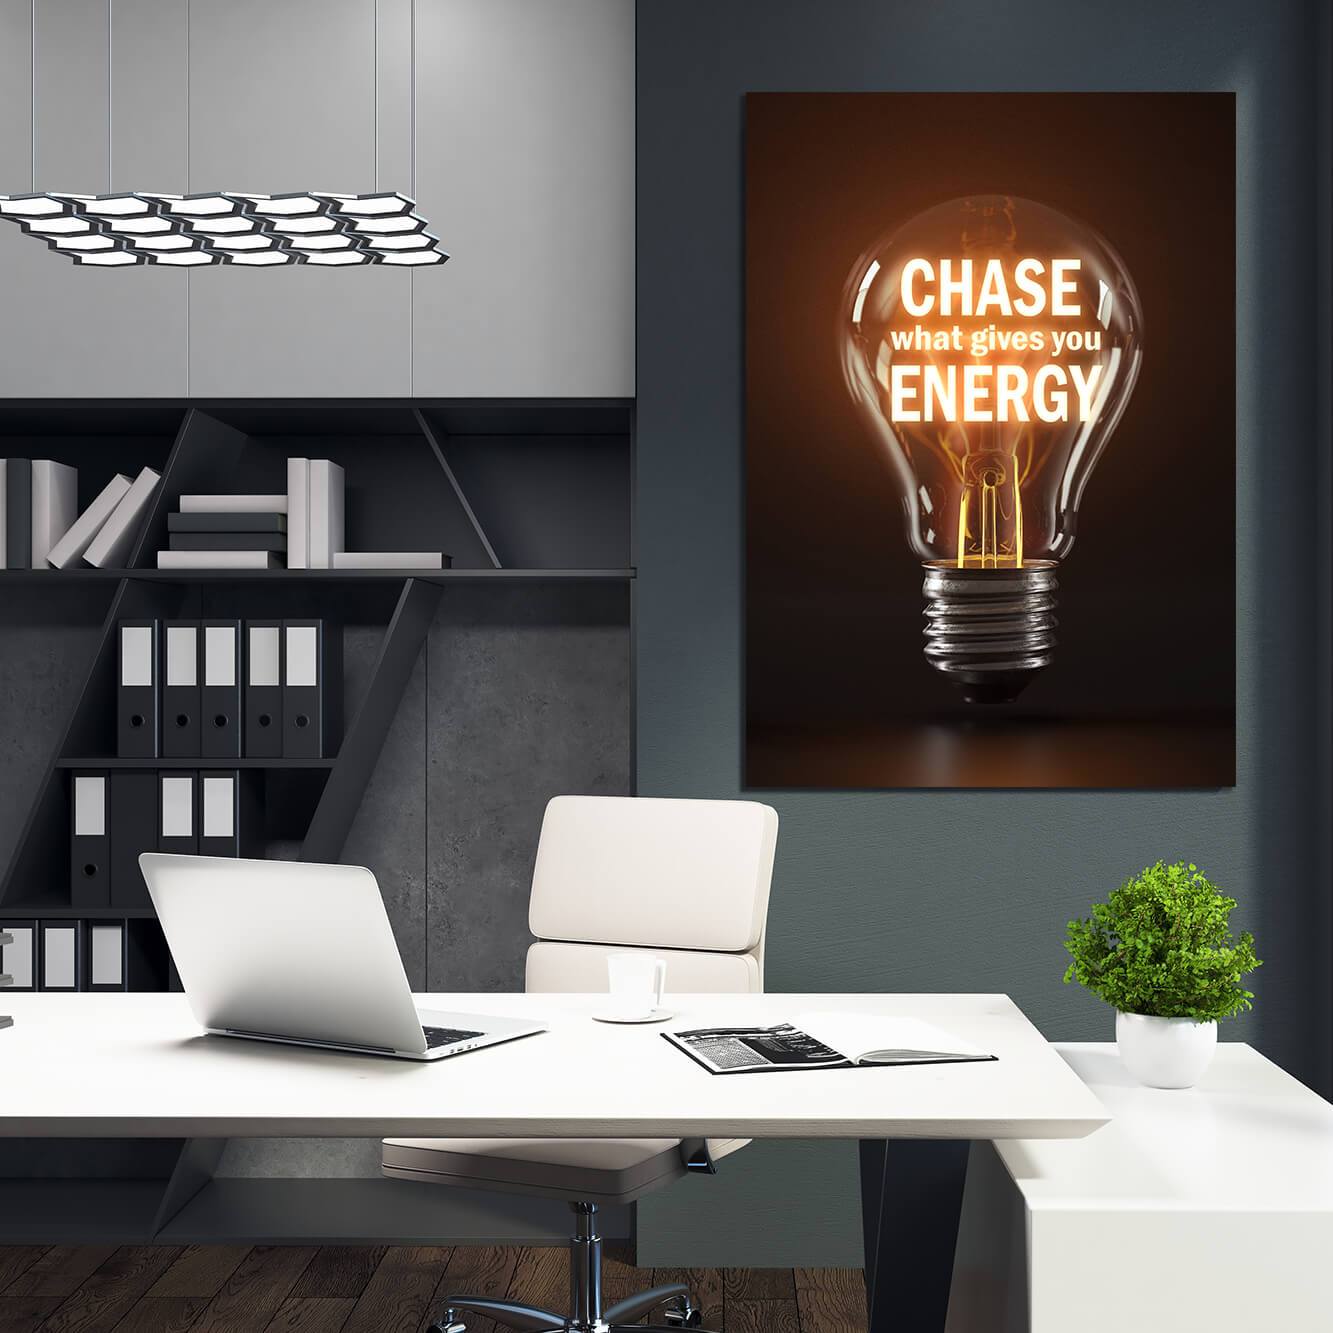 Chase Energy Wall Art | Inspirational Wall Art Motivational Wall Art Quotes Office Art | ImpaktMaker Exclusive Canvas Art Portrait